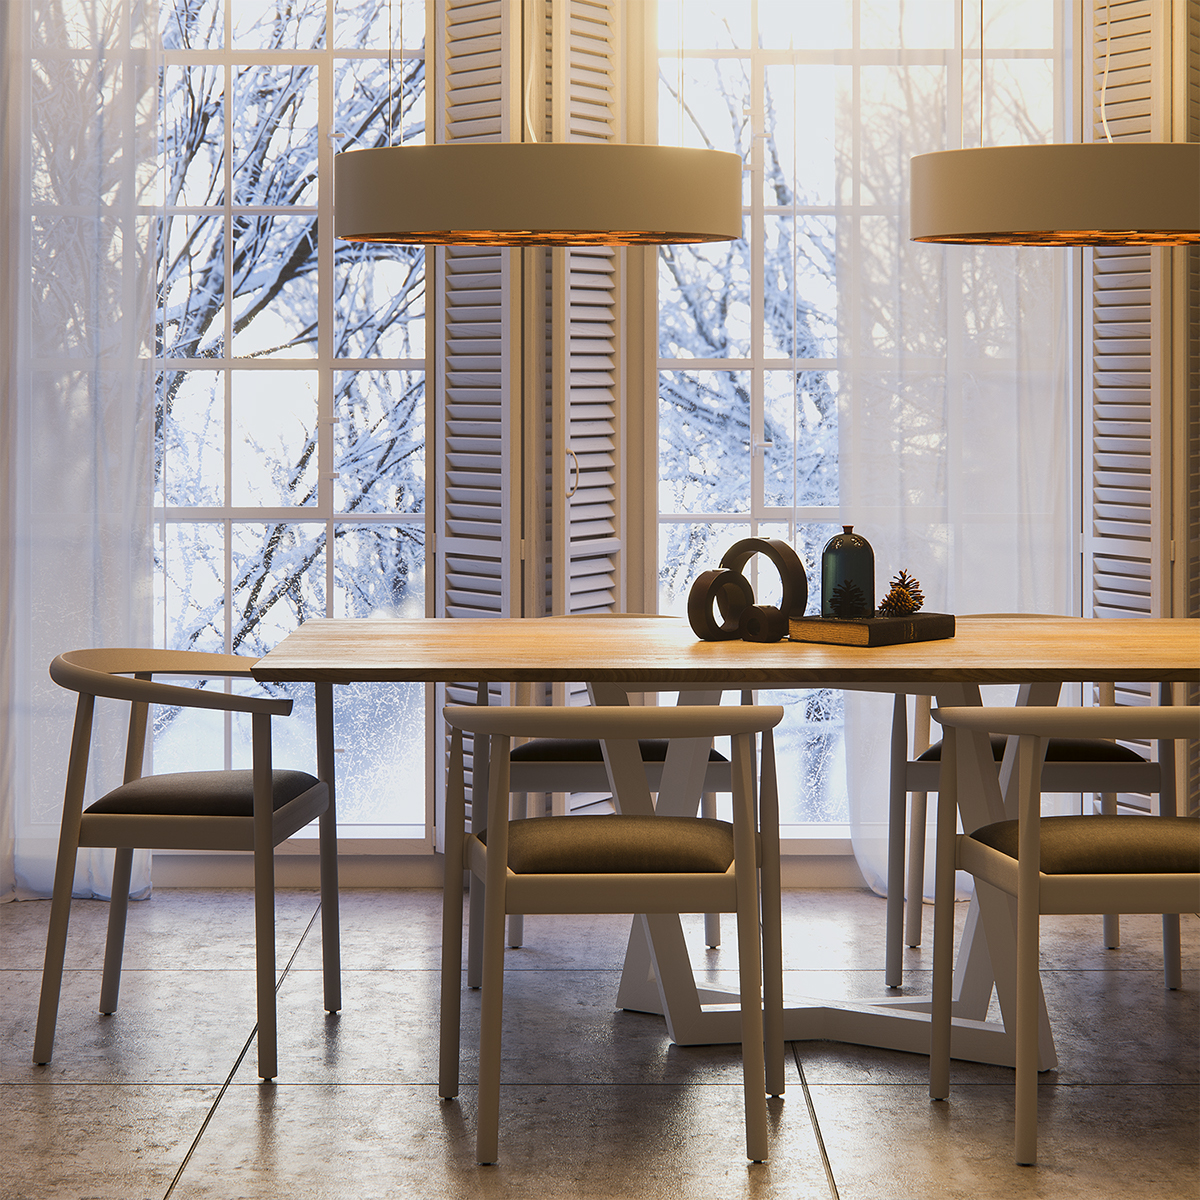 Interior living room kitchen apartment light 3D visualization CGI Render selection Double-aye furniture design modern vray